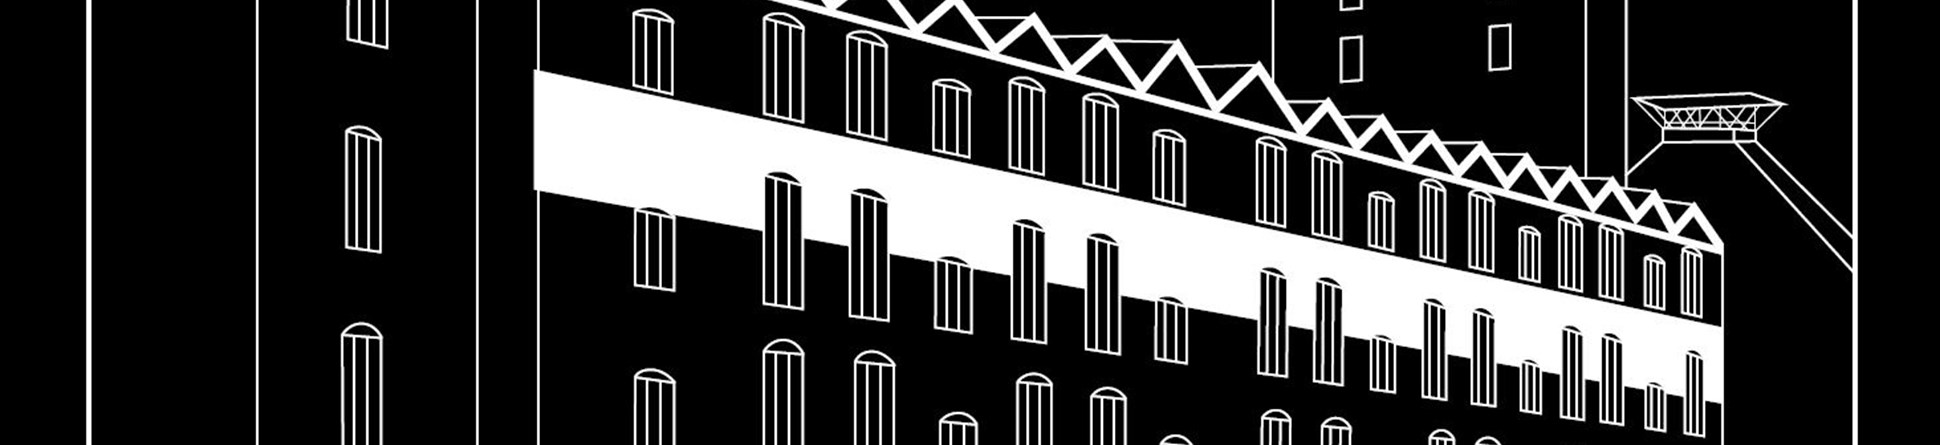 White on black illustration of Shrewsbury Flaxmill Maltings